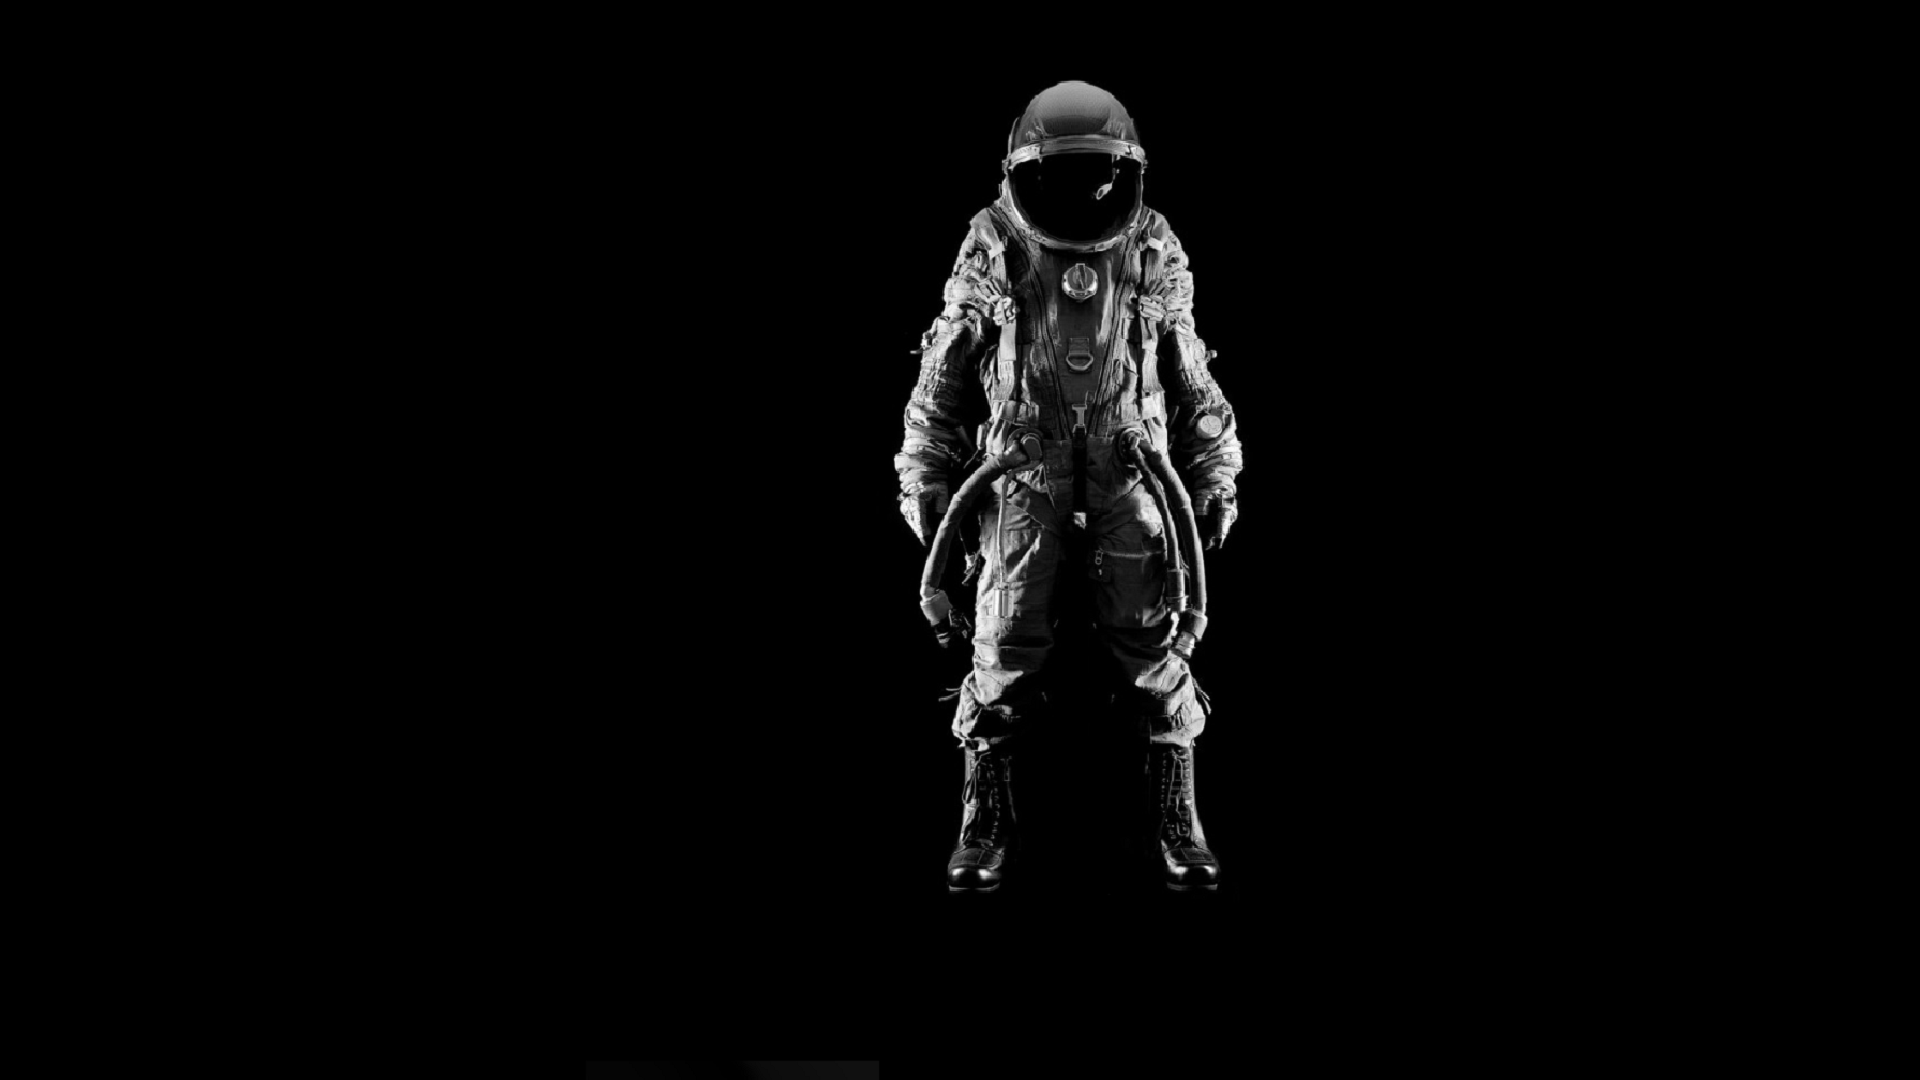 General 1920x1080 astronaut simple background monochrome minimalism black background